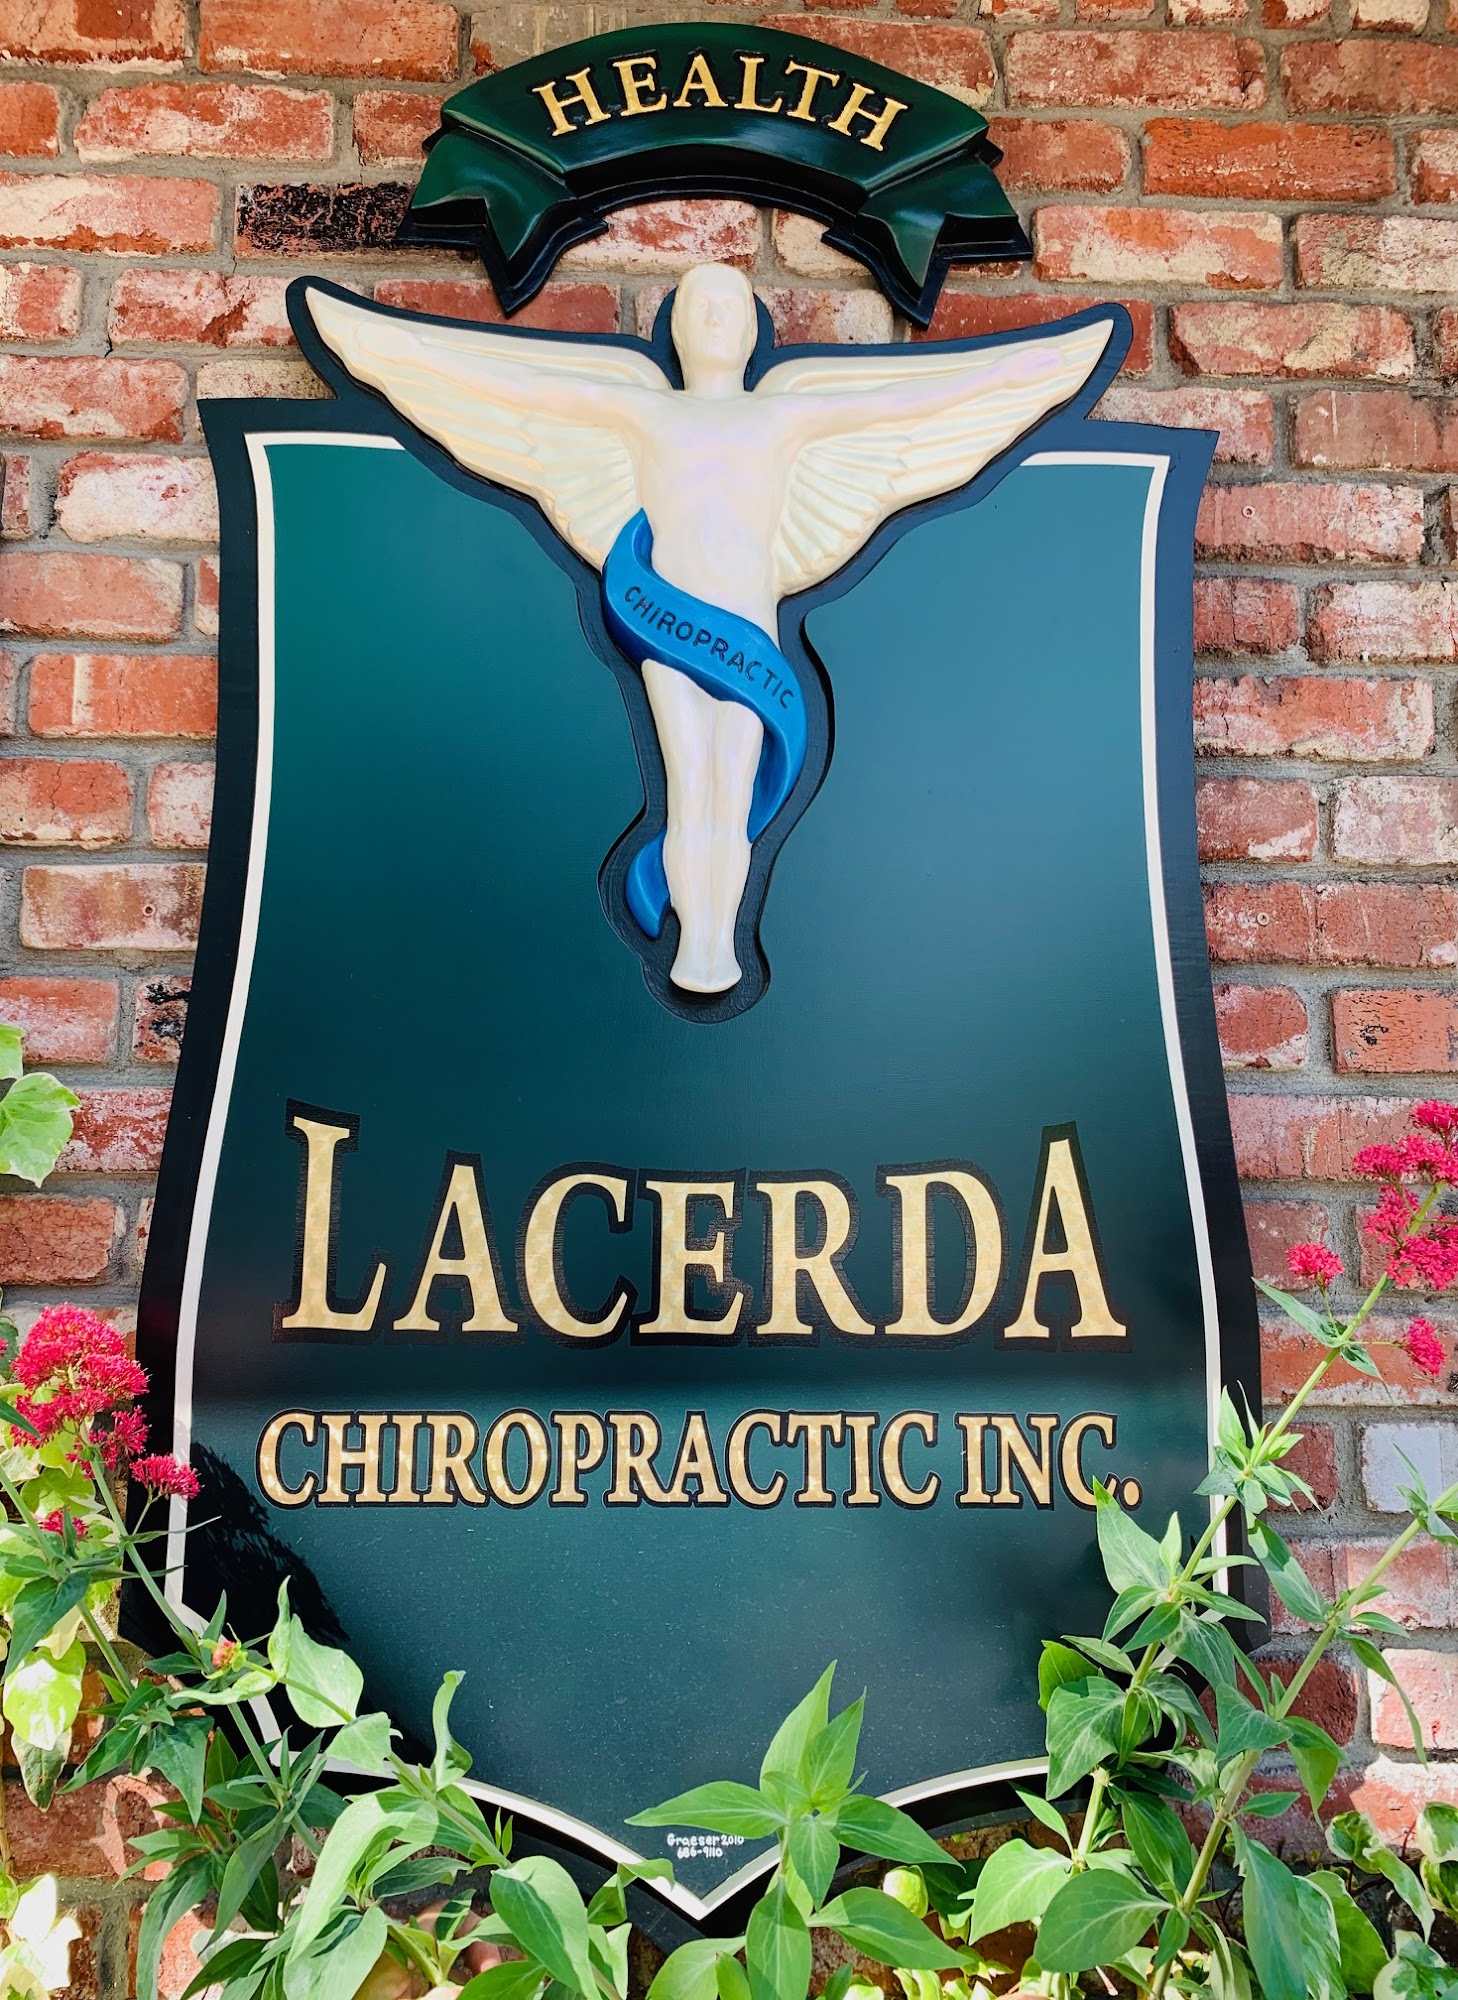 Lacerda Chiropractic Inc.